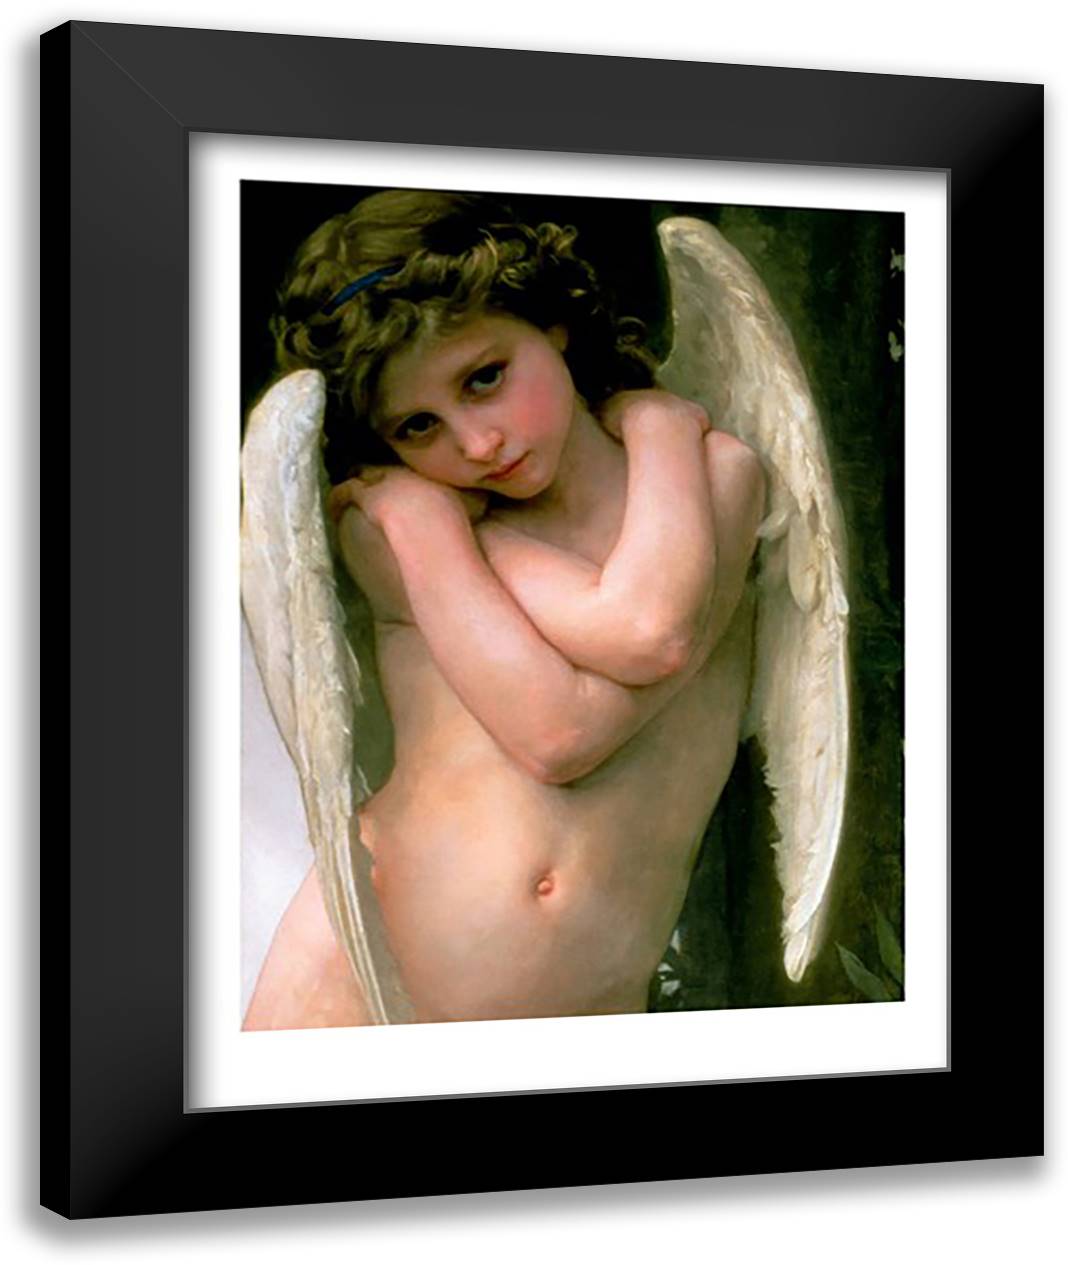 Cupidon 22x28 Black Modern Wood Framed Art Print Poster by Bouguereau, William Adolphe